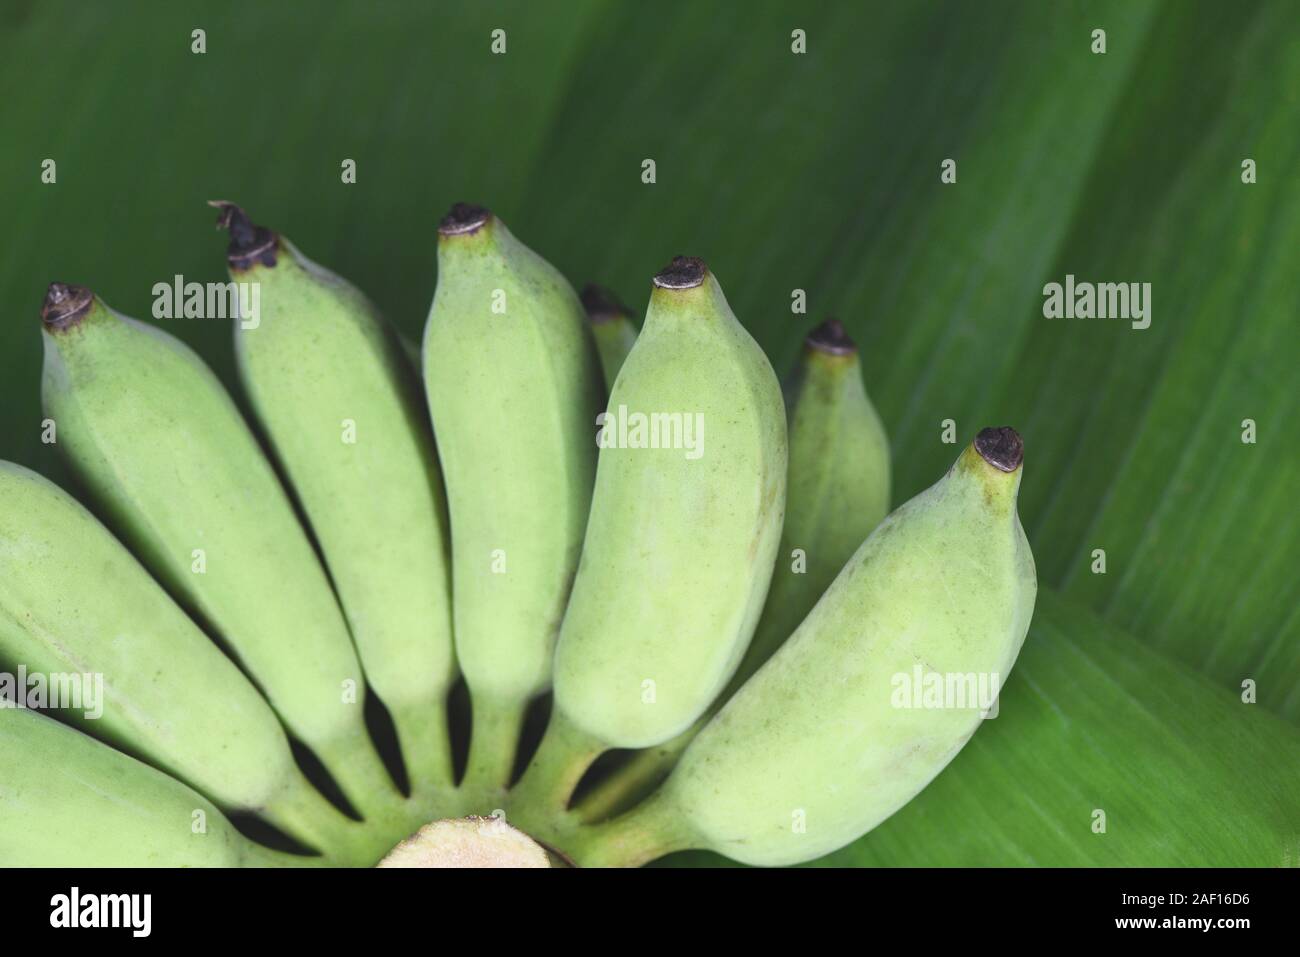 bunch of green banana on raw banana leaf background Stock Photo